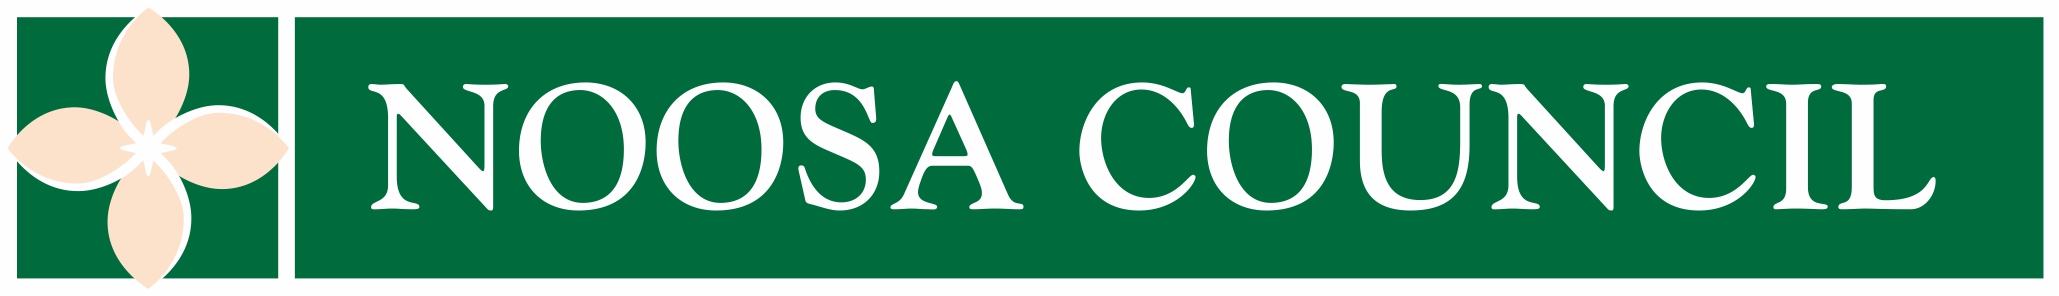 Logo Image for Noosa Shire council